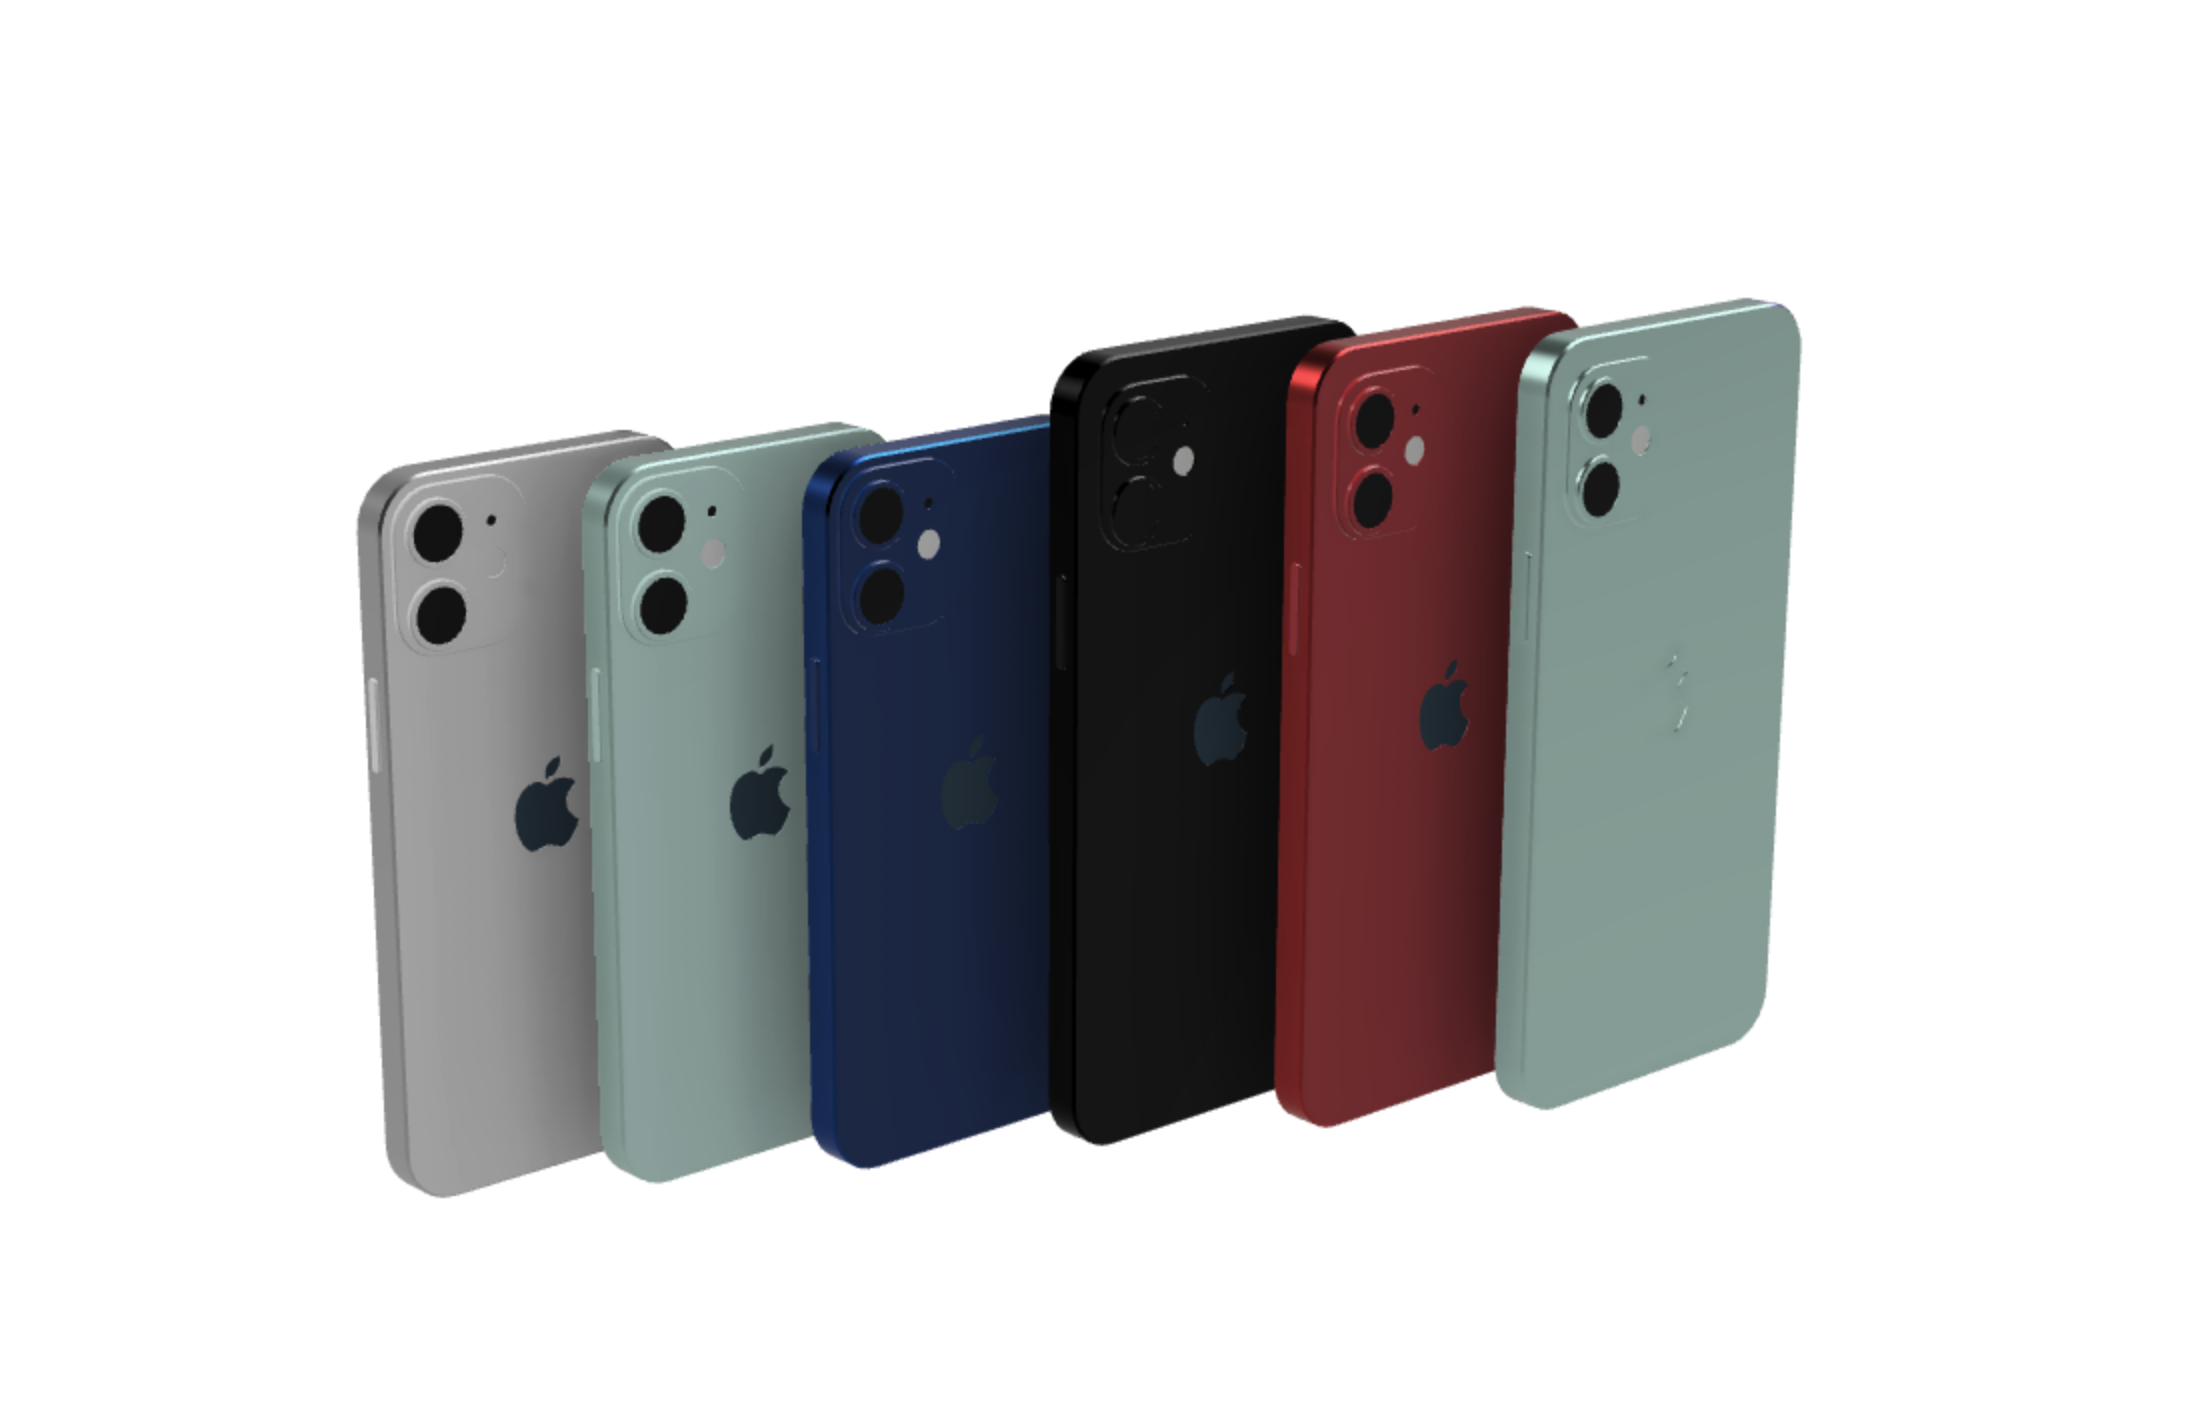 iPhone 12 Dummy Models (iPhone 12 Mini, iPhone 12, iPhone 12 Pro